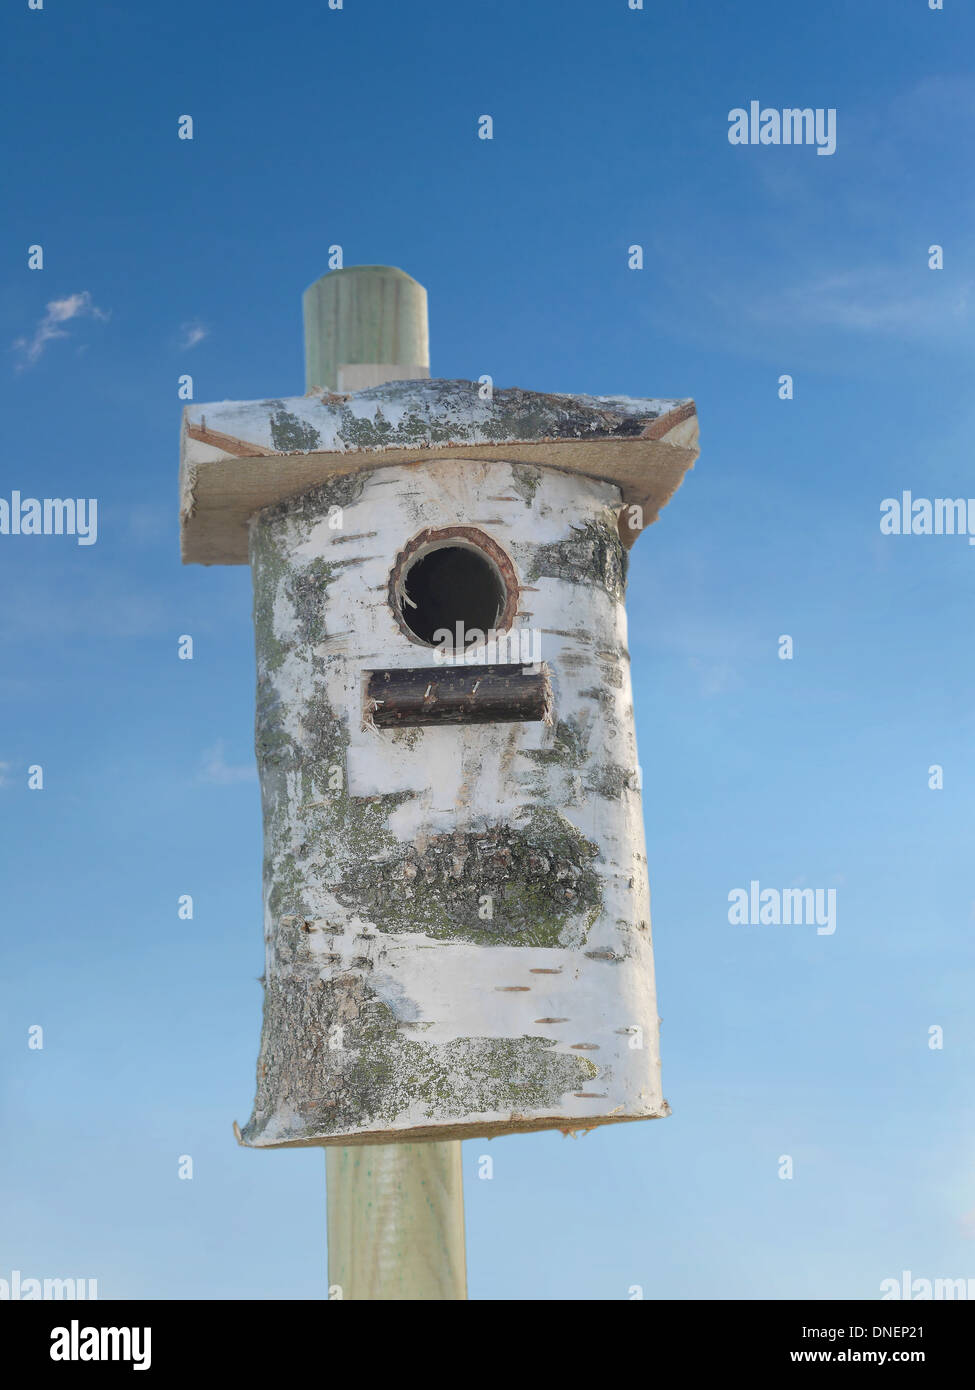 Wooden nesting box over blue sky Stock Photo